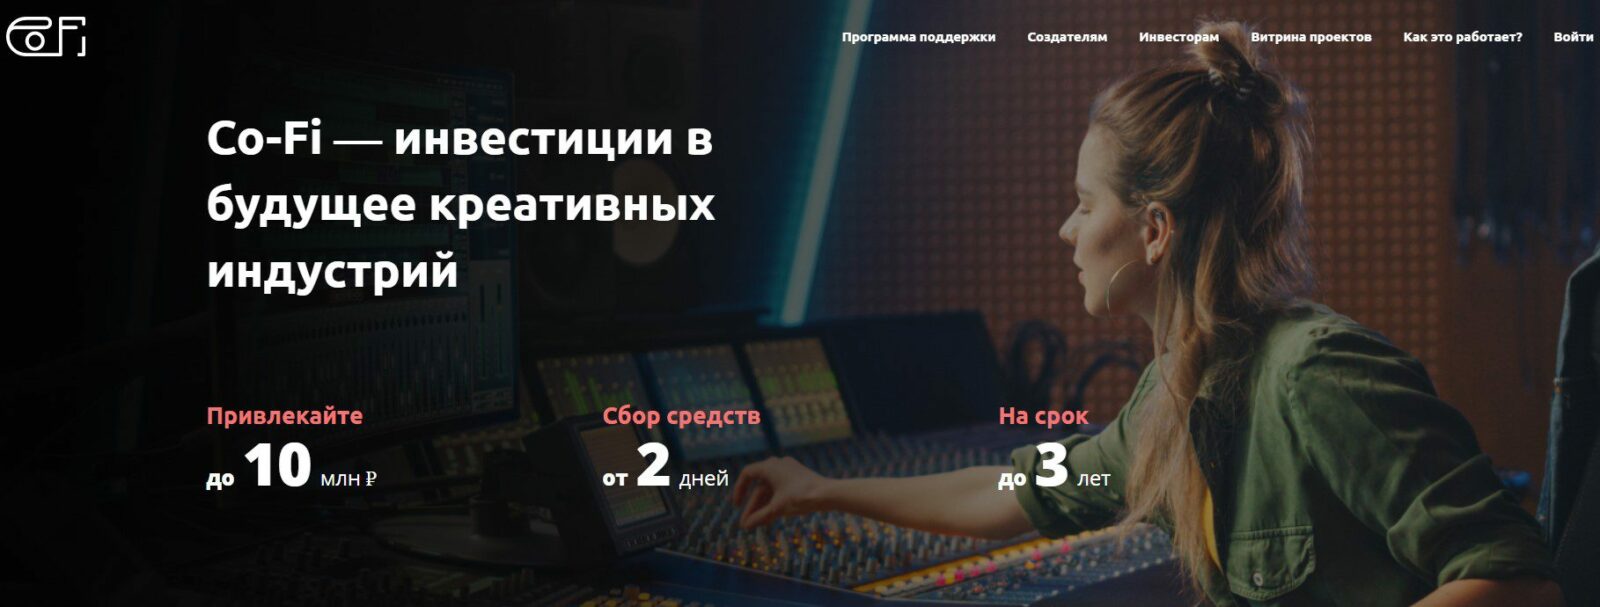 Сайт платформы Cofi ru